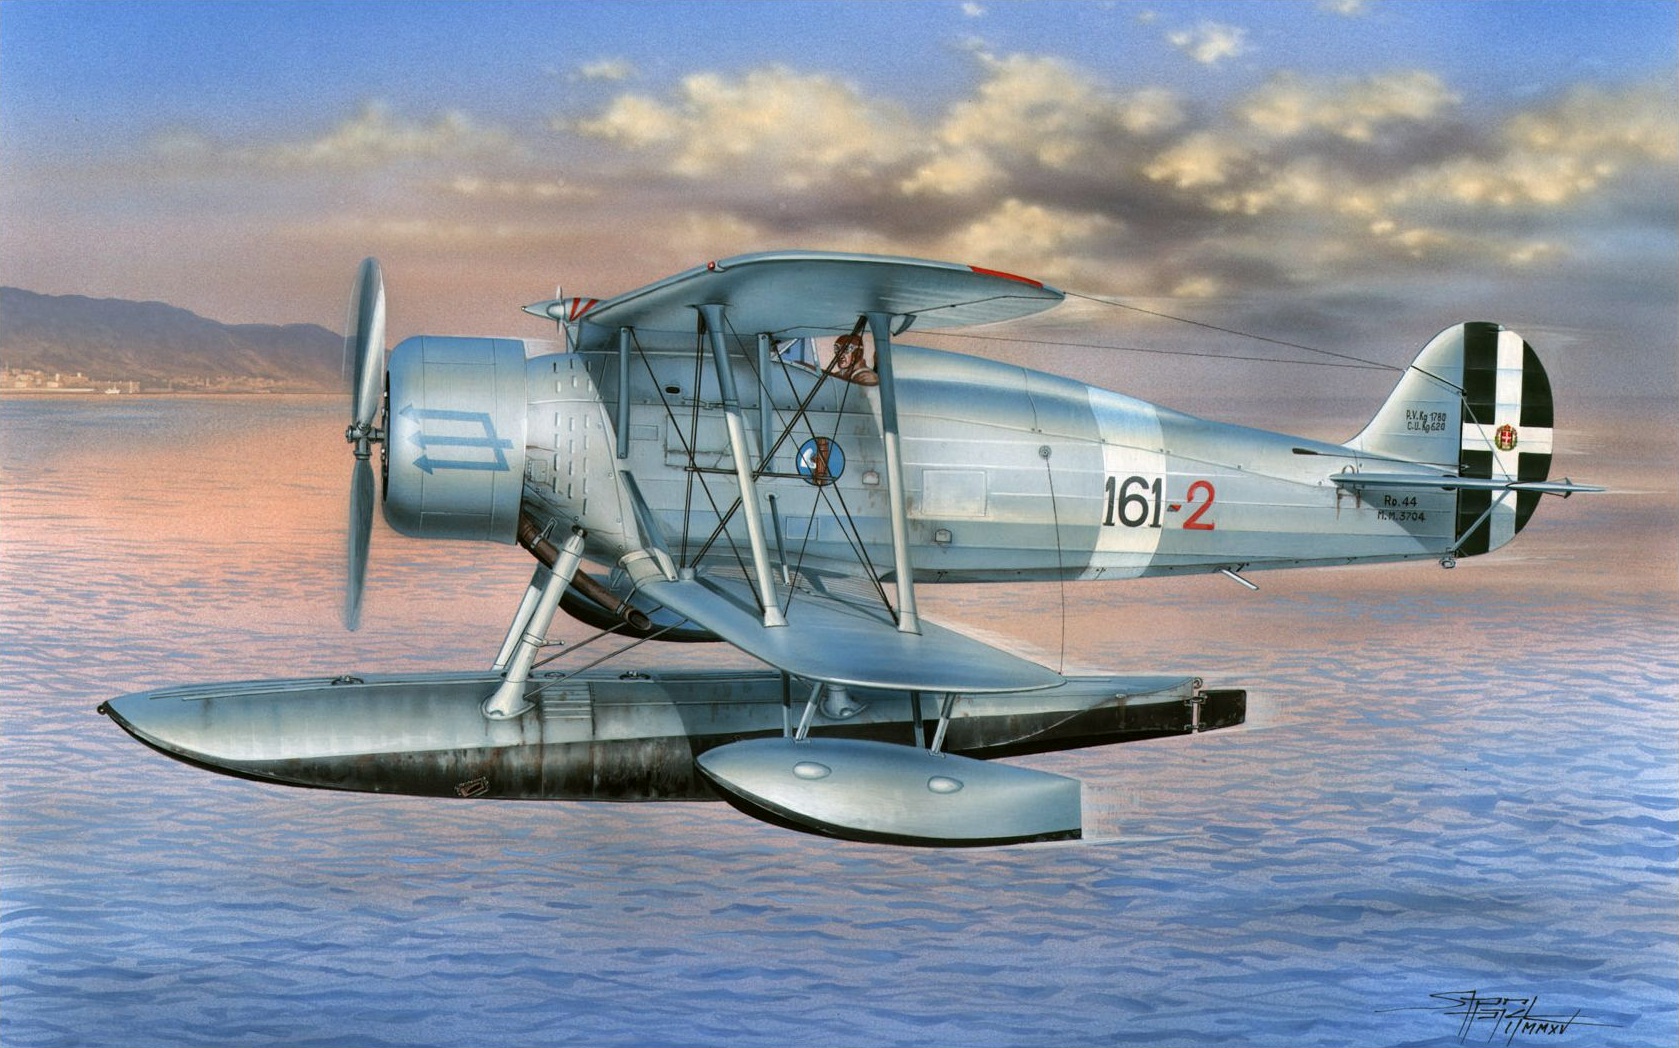 General 1679x1048 World War II war aircraft airplane military military aircraft Italy Italian biplane floatplane Italian aircraft